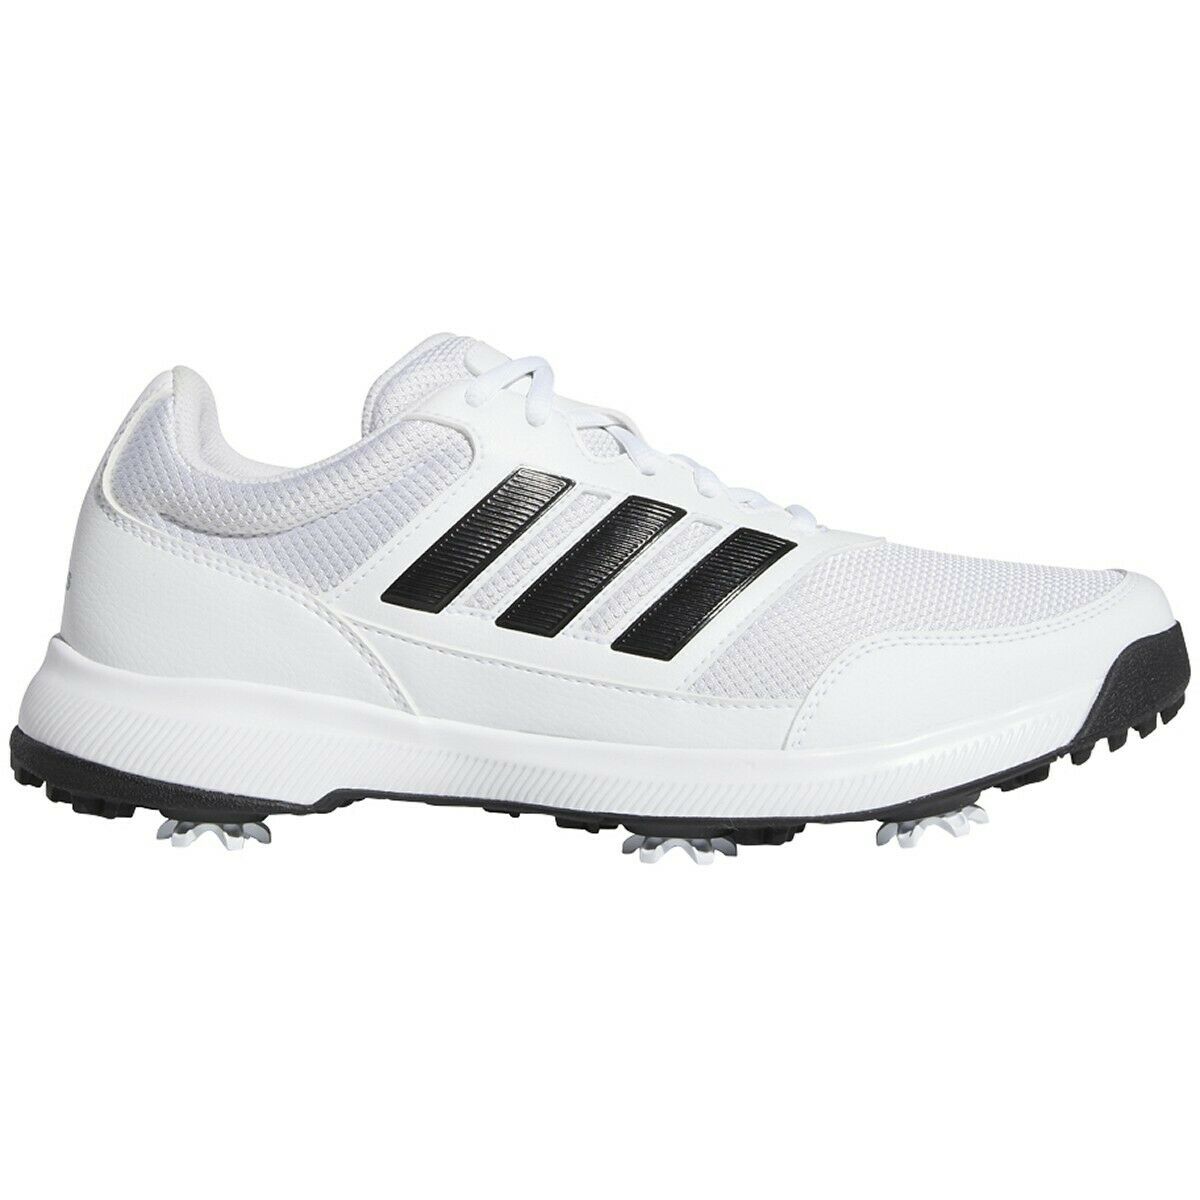 Adidas Golf Tech Response 2.0 Men's Golf Shoes